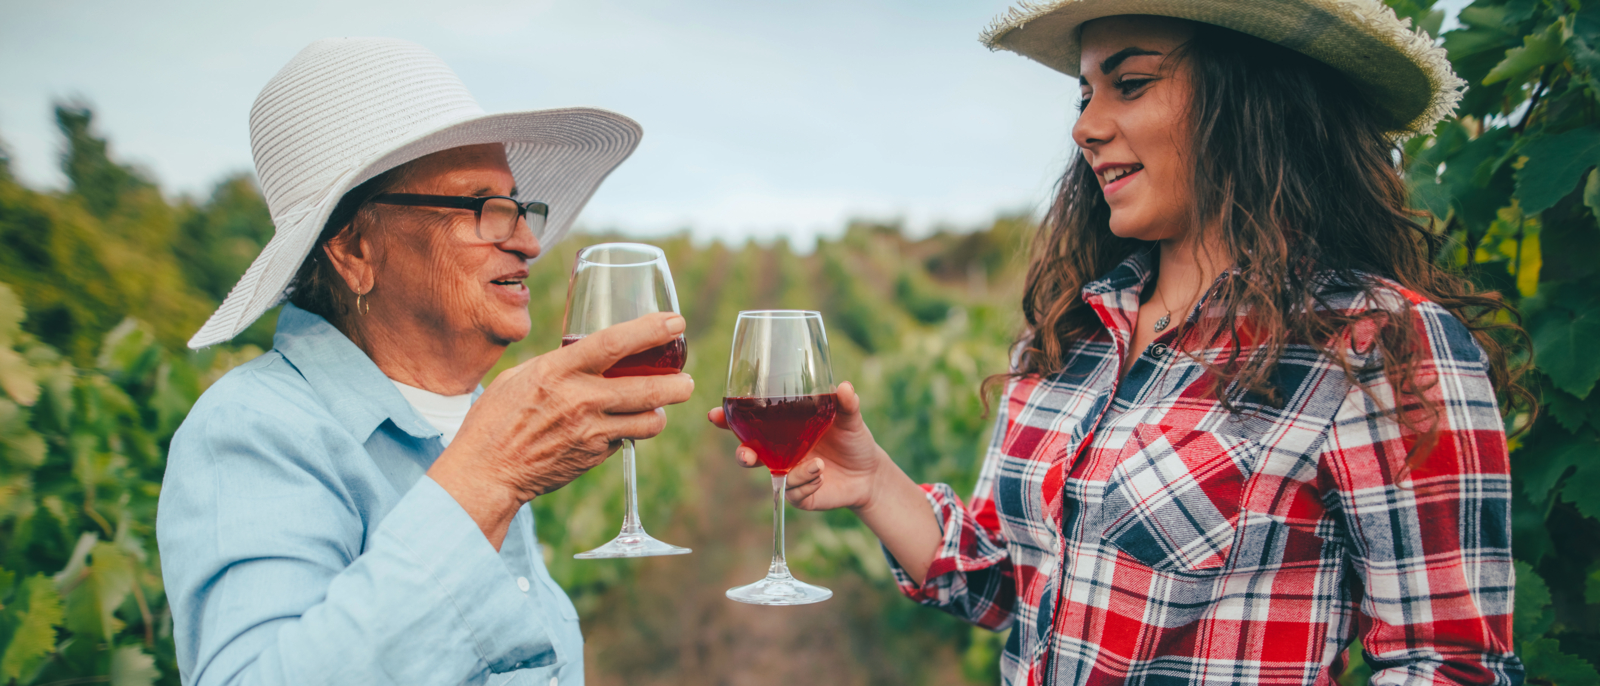 Grandmother and granddaughter vineyard